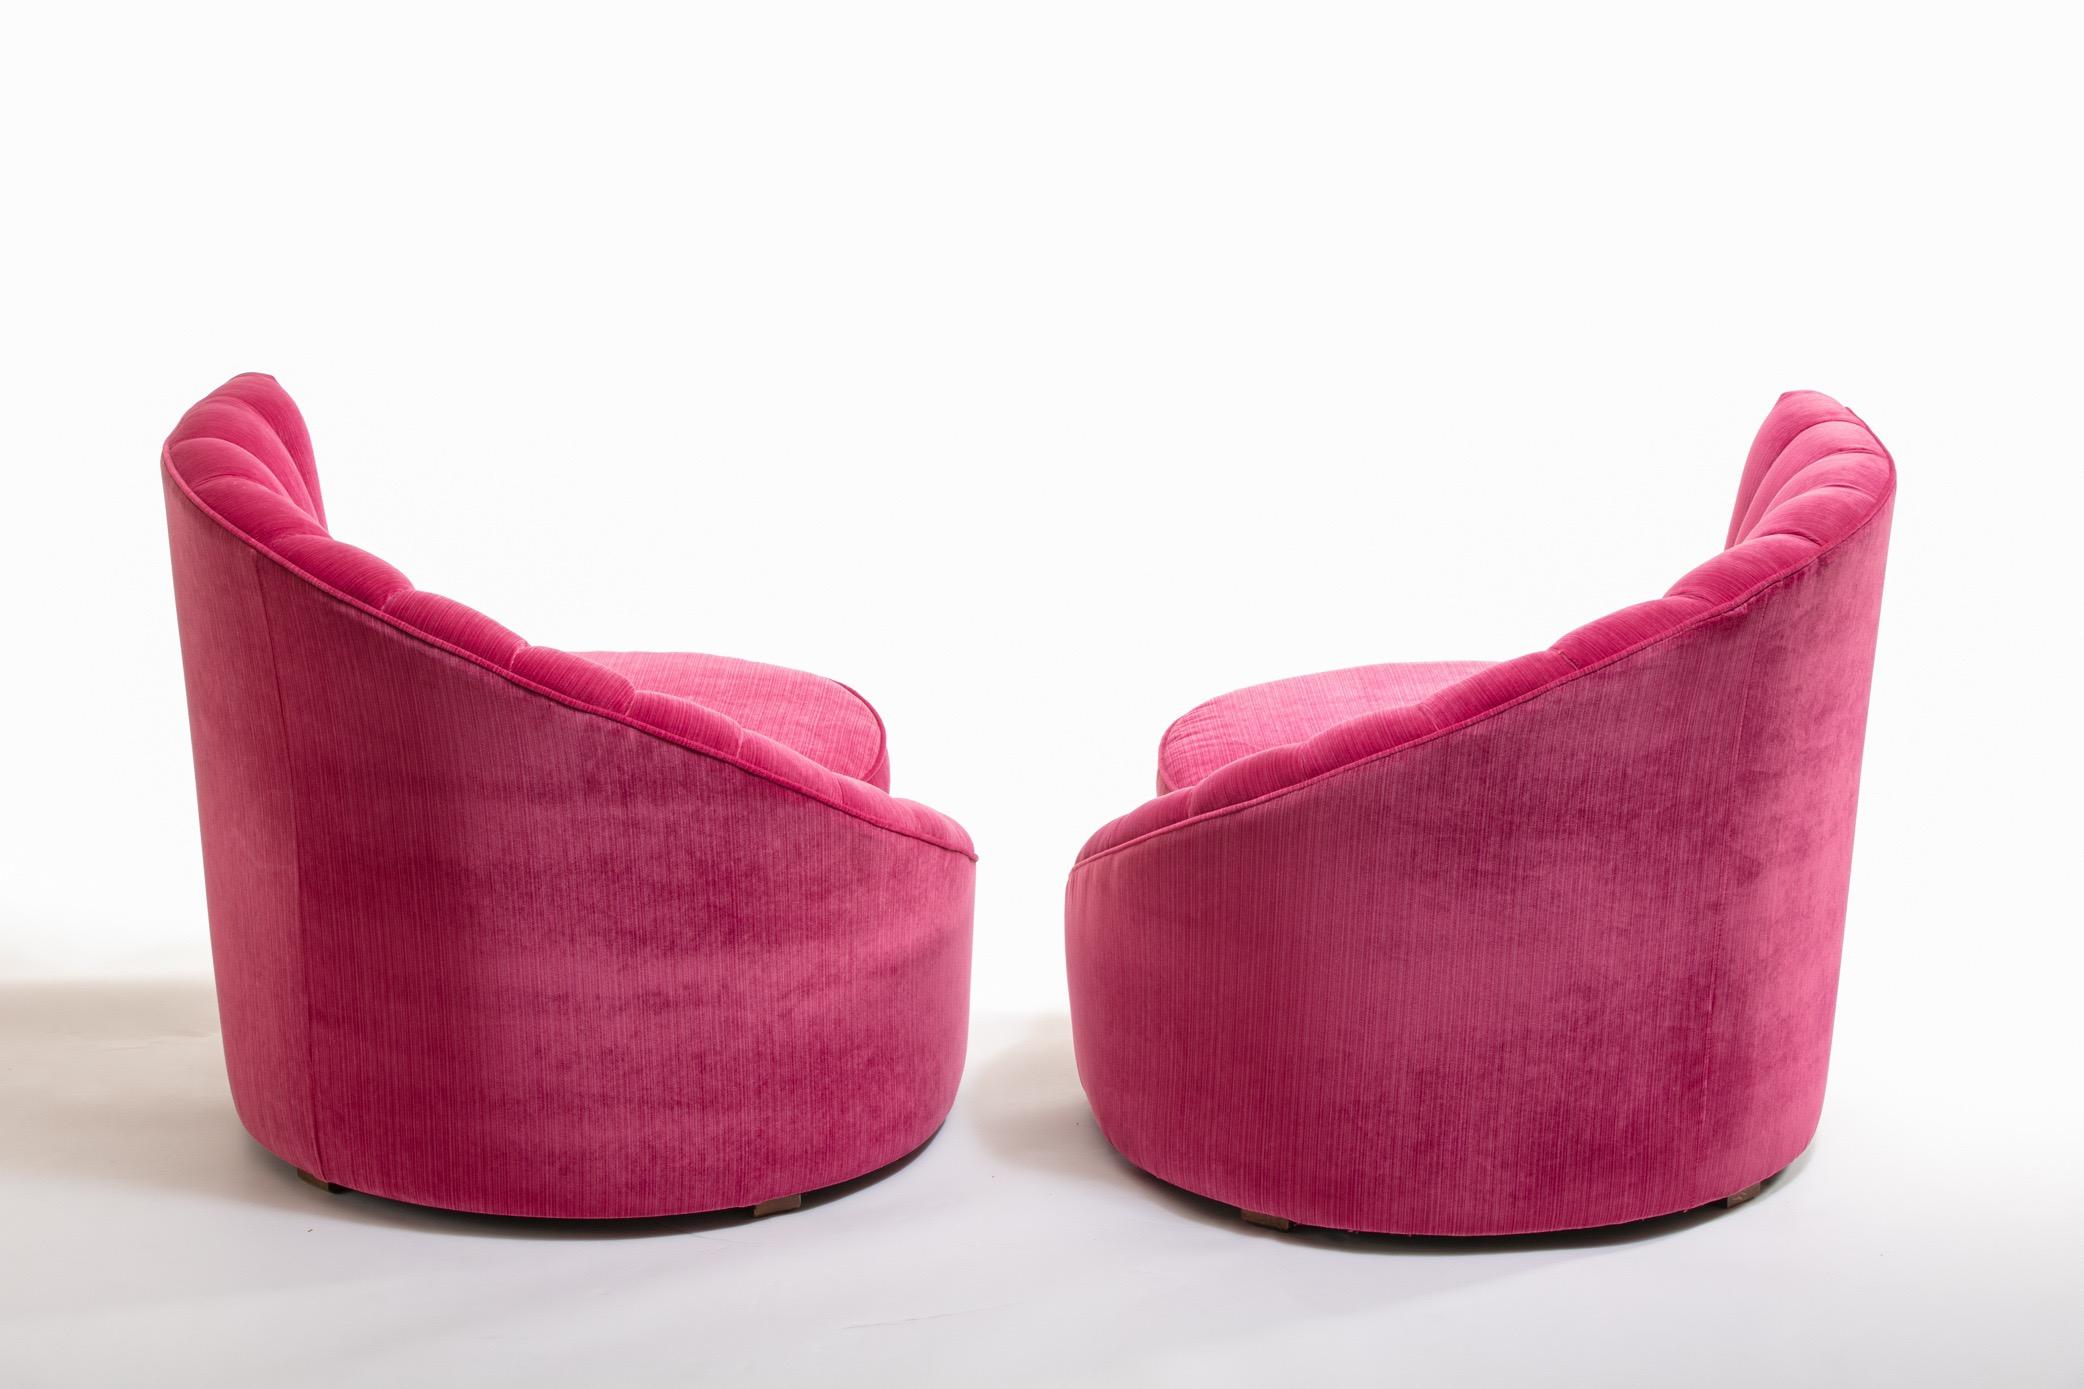 American Pair of Hollywood Regency Asymmetrical Slipper Chairs in Hot Pink Strie Velvet